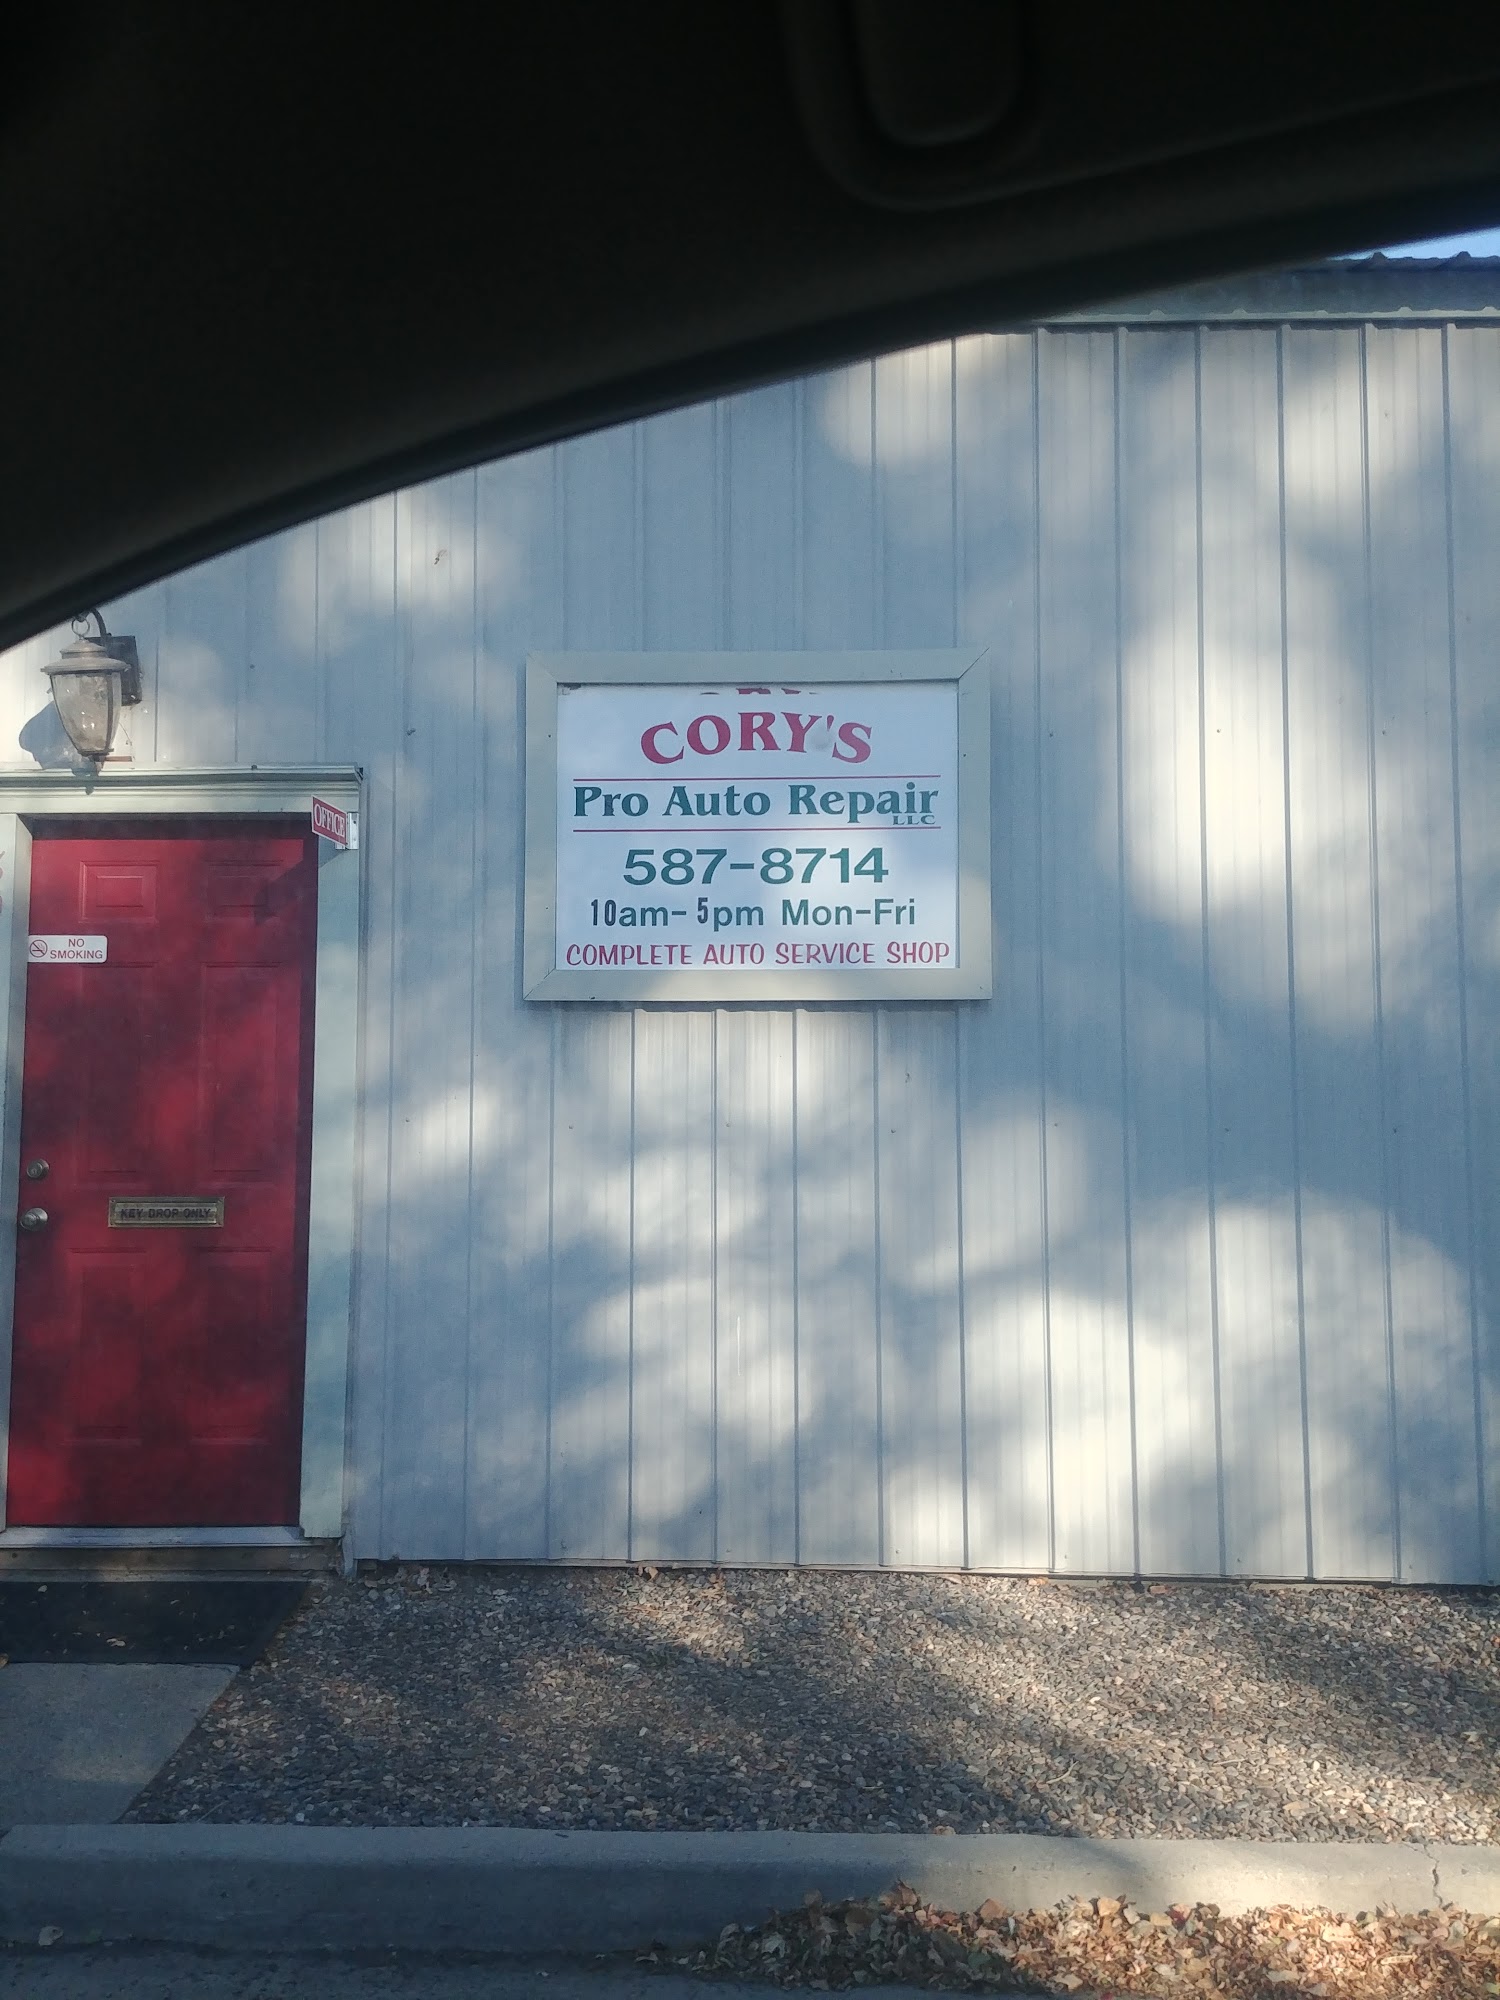 Cory's Pro Auto Repair